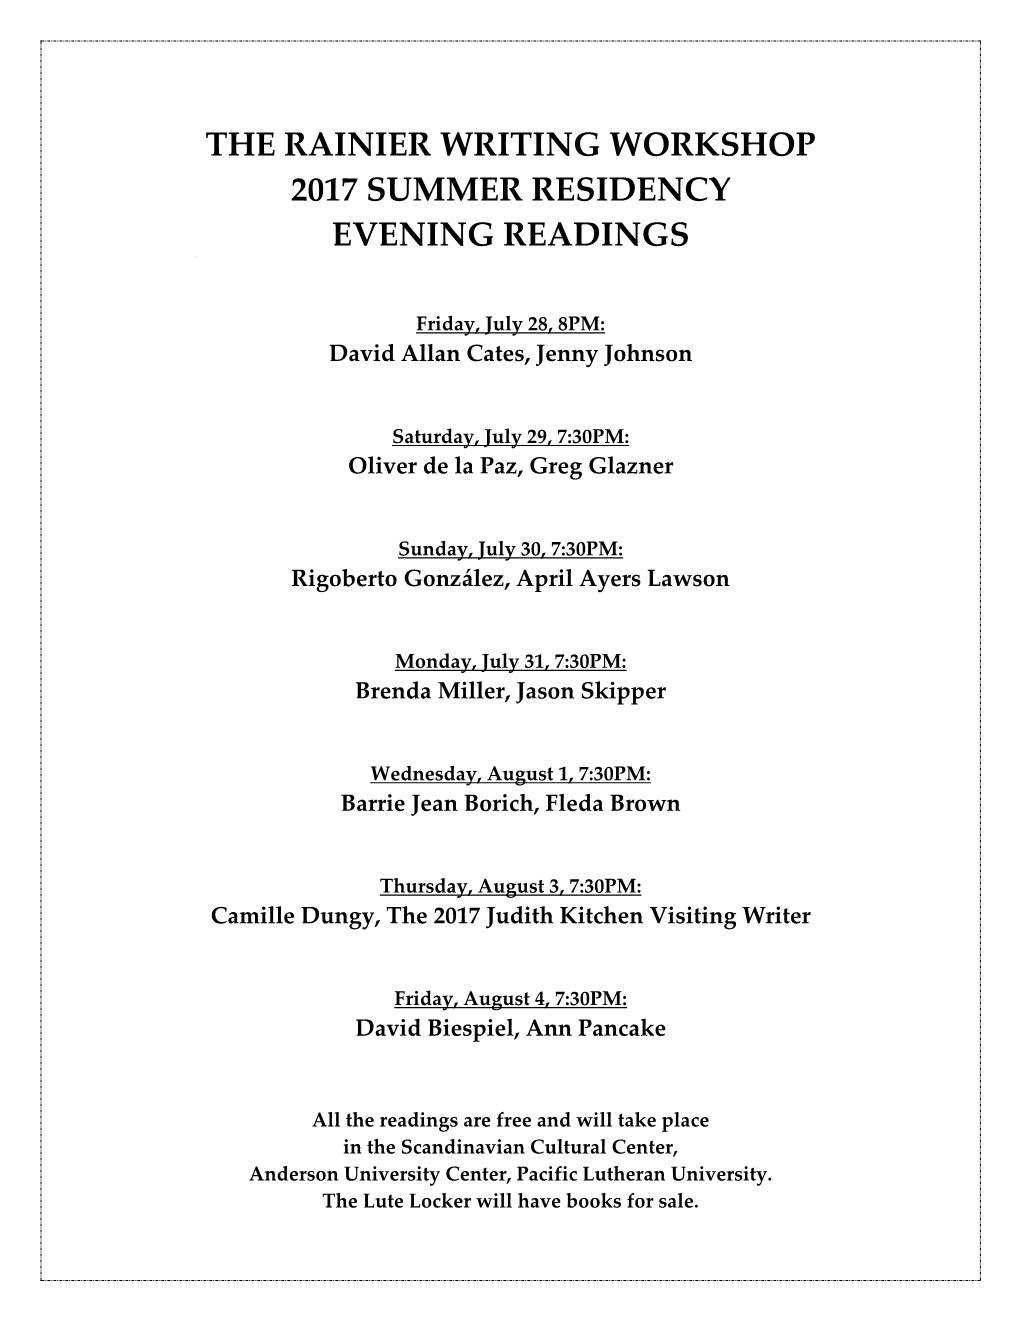 The Rainier Writing Workshop 2017 Summer Residency Evening Readings